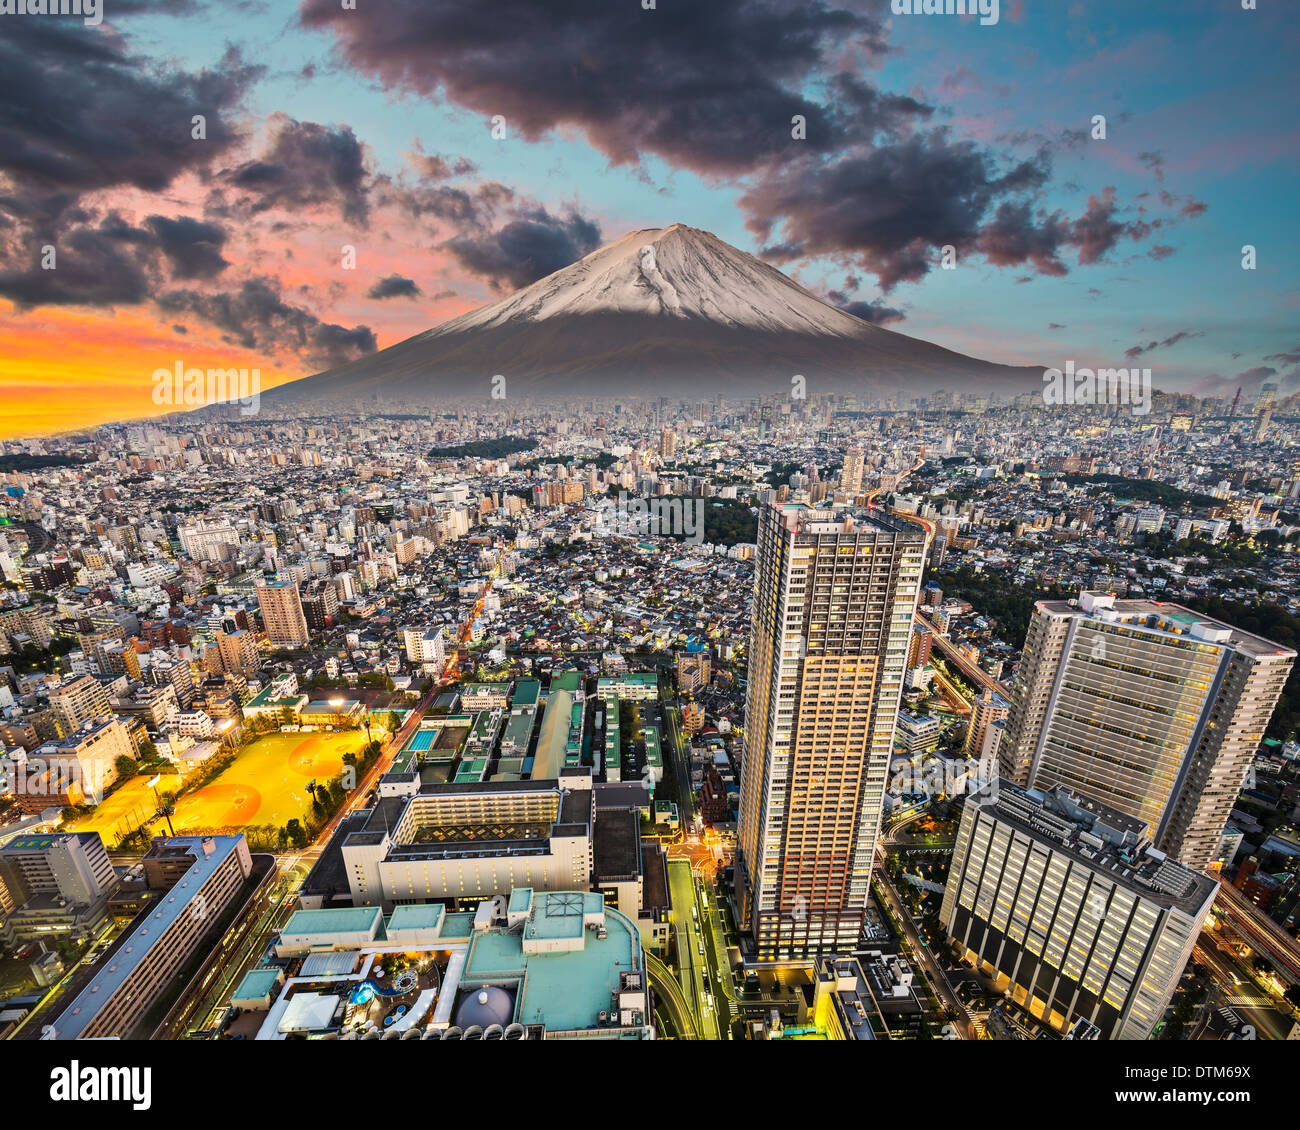 Tokyo, Japan cityscape with Mt. Fuji. Stock Photo